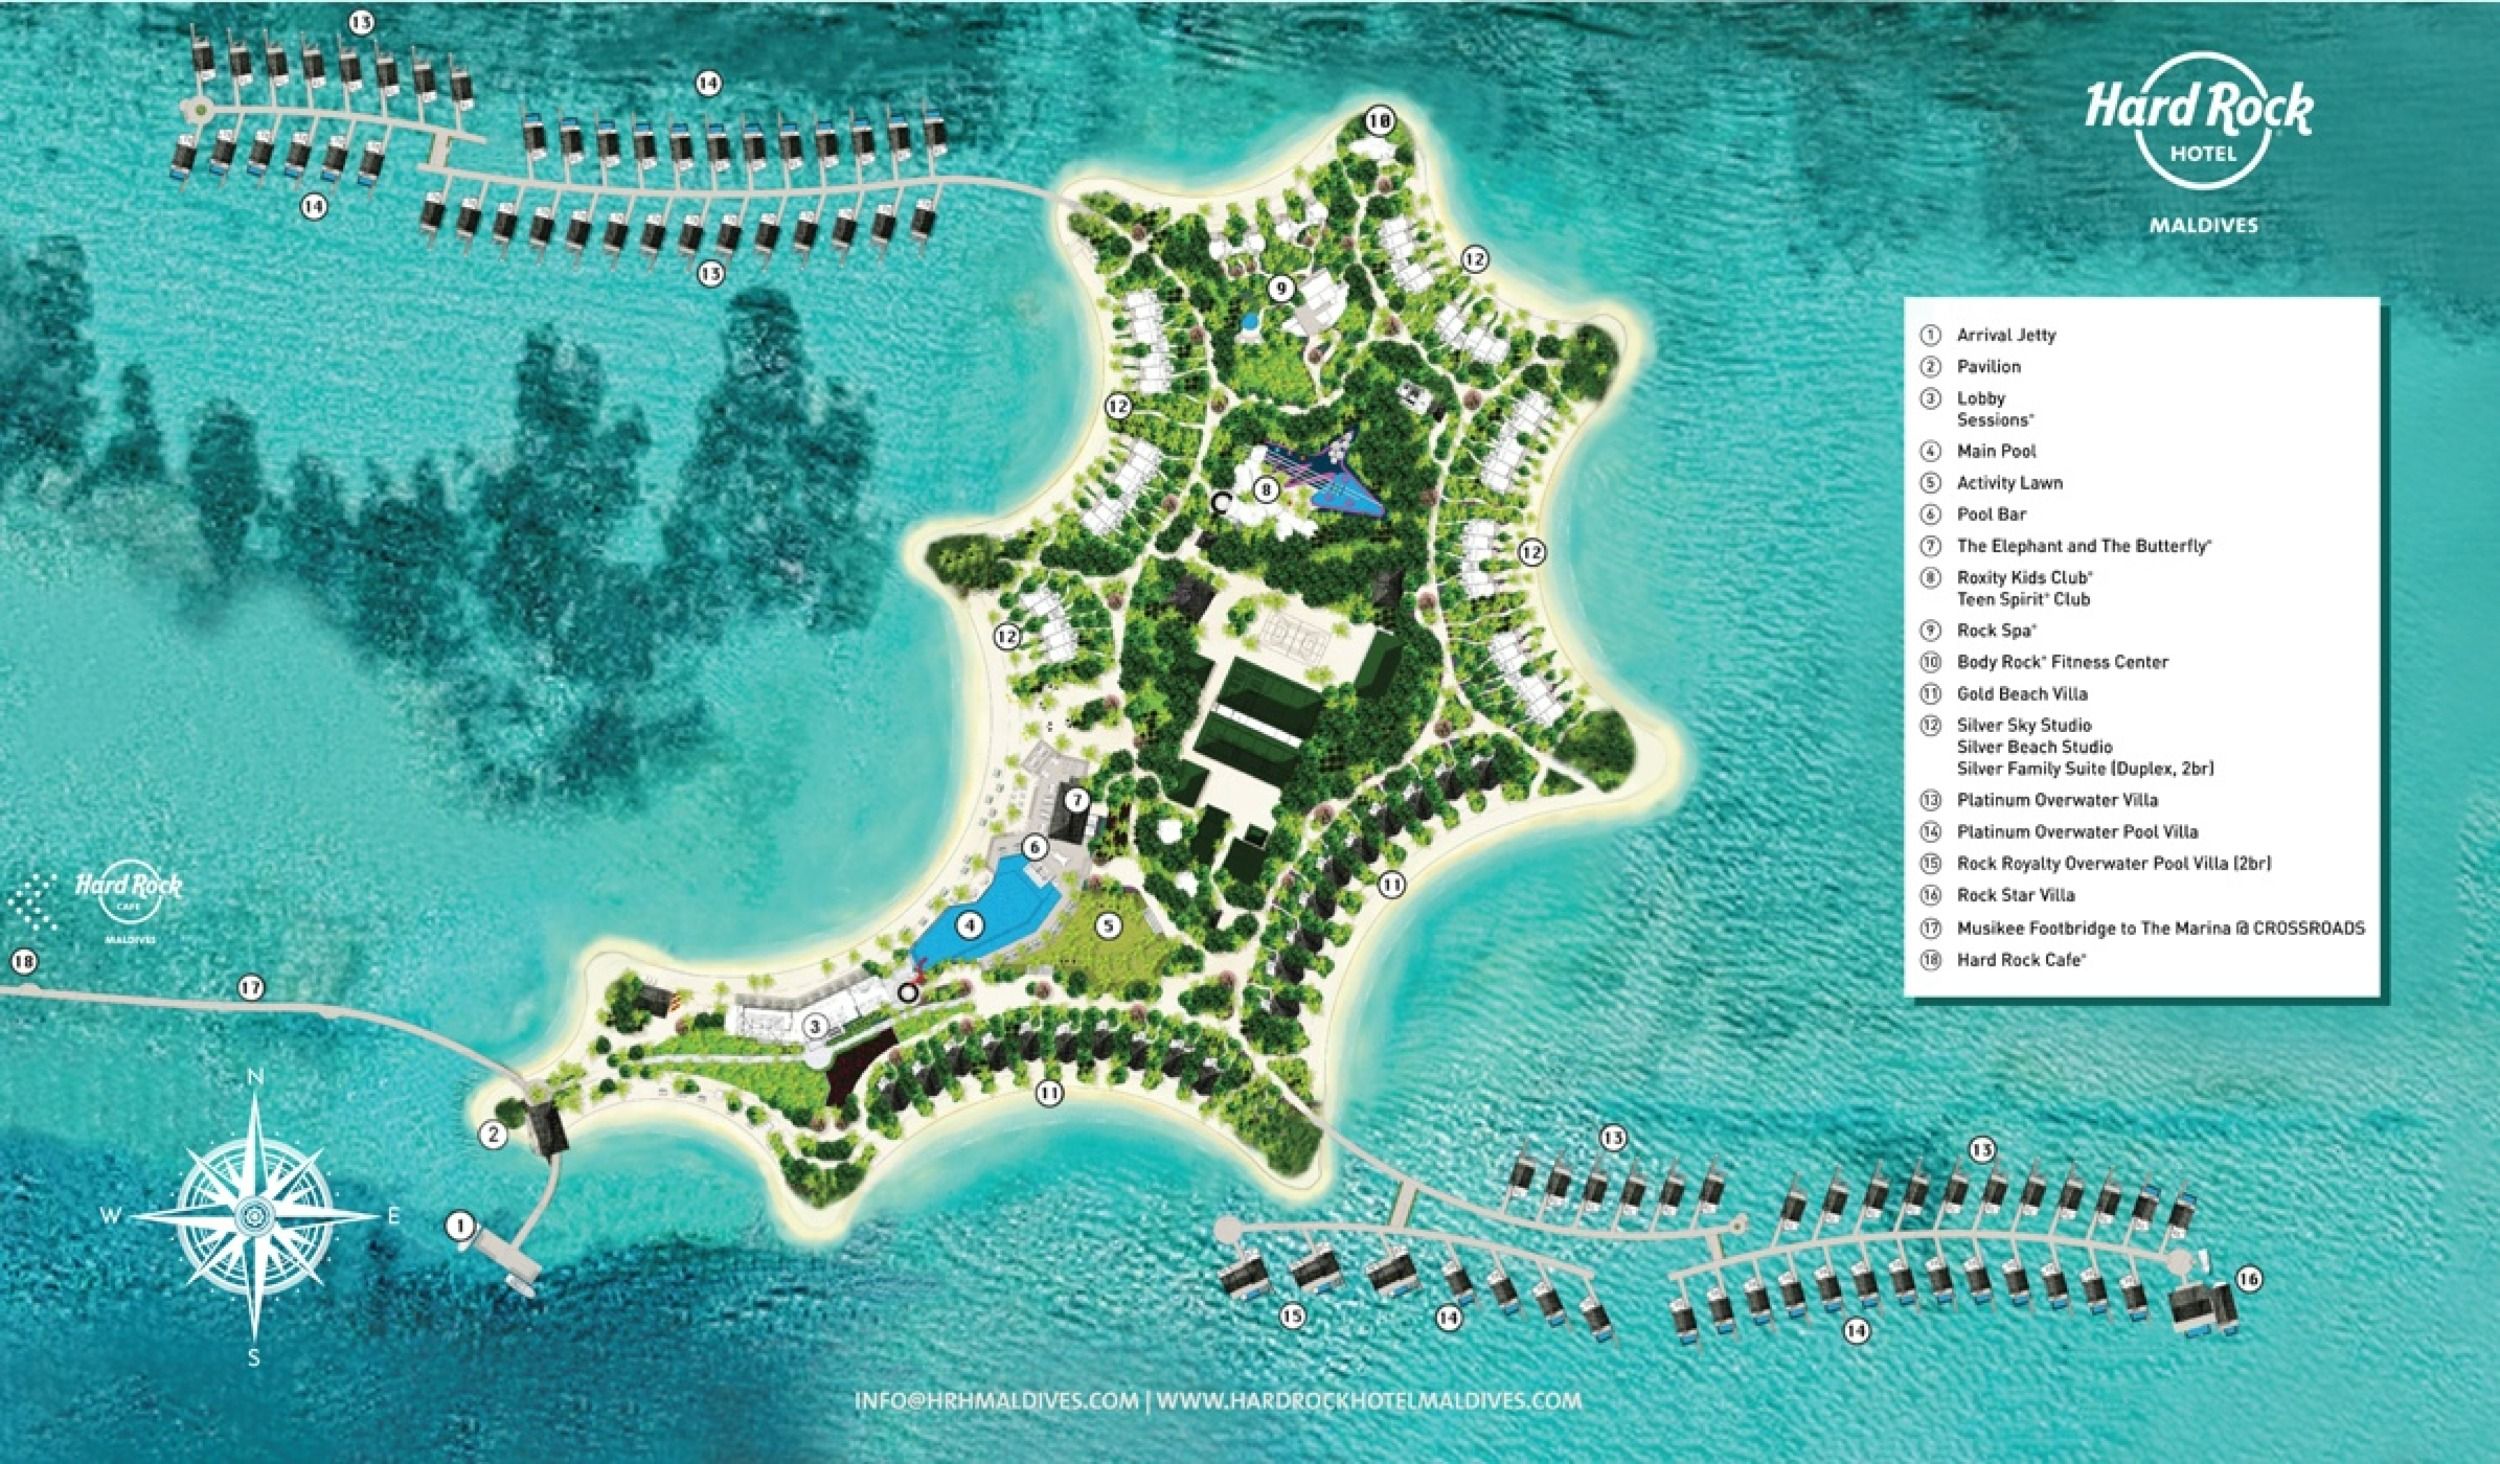 Hard Rock Hotel Maldives - Resort Map